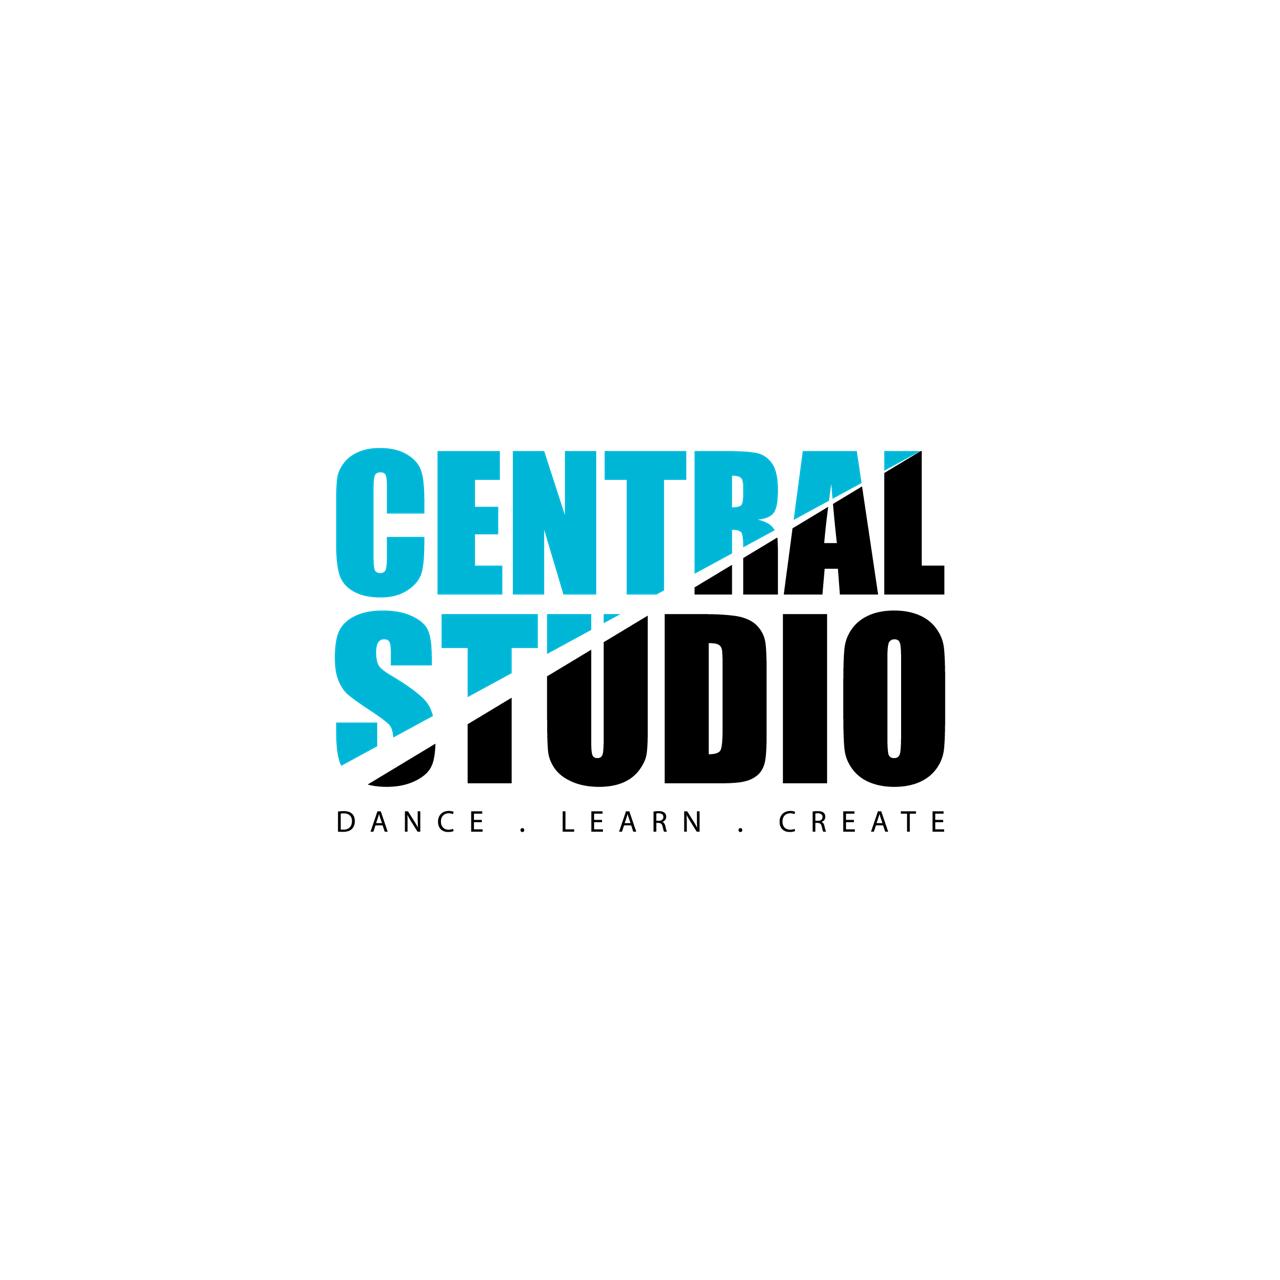 Central studio